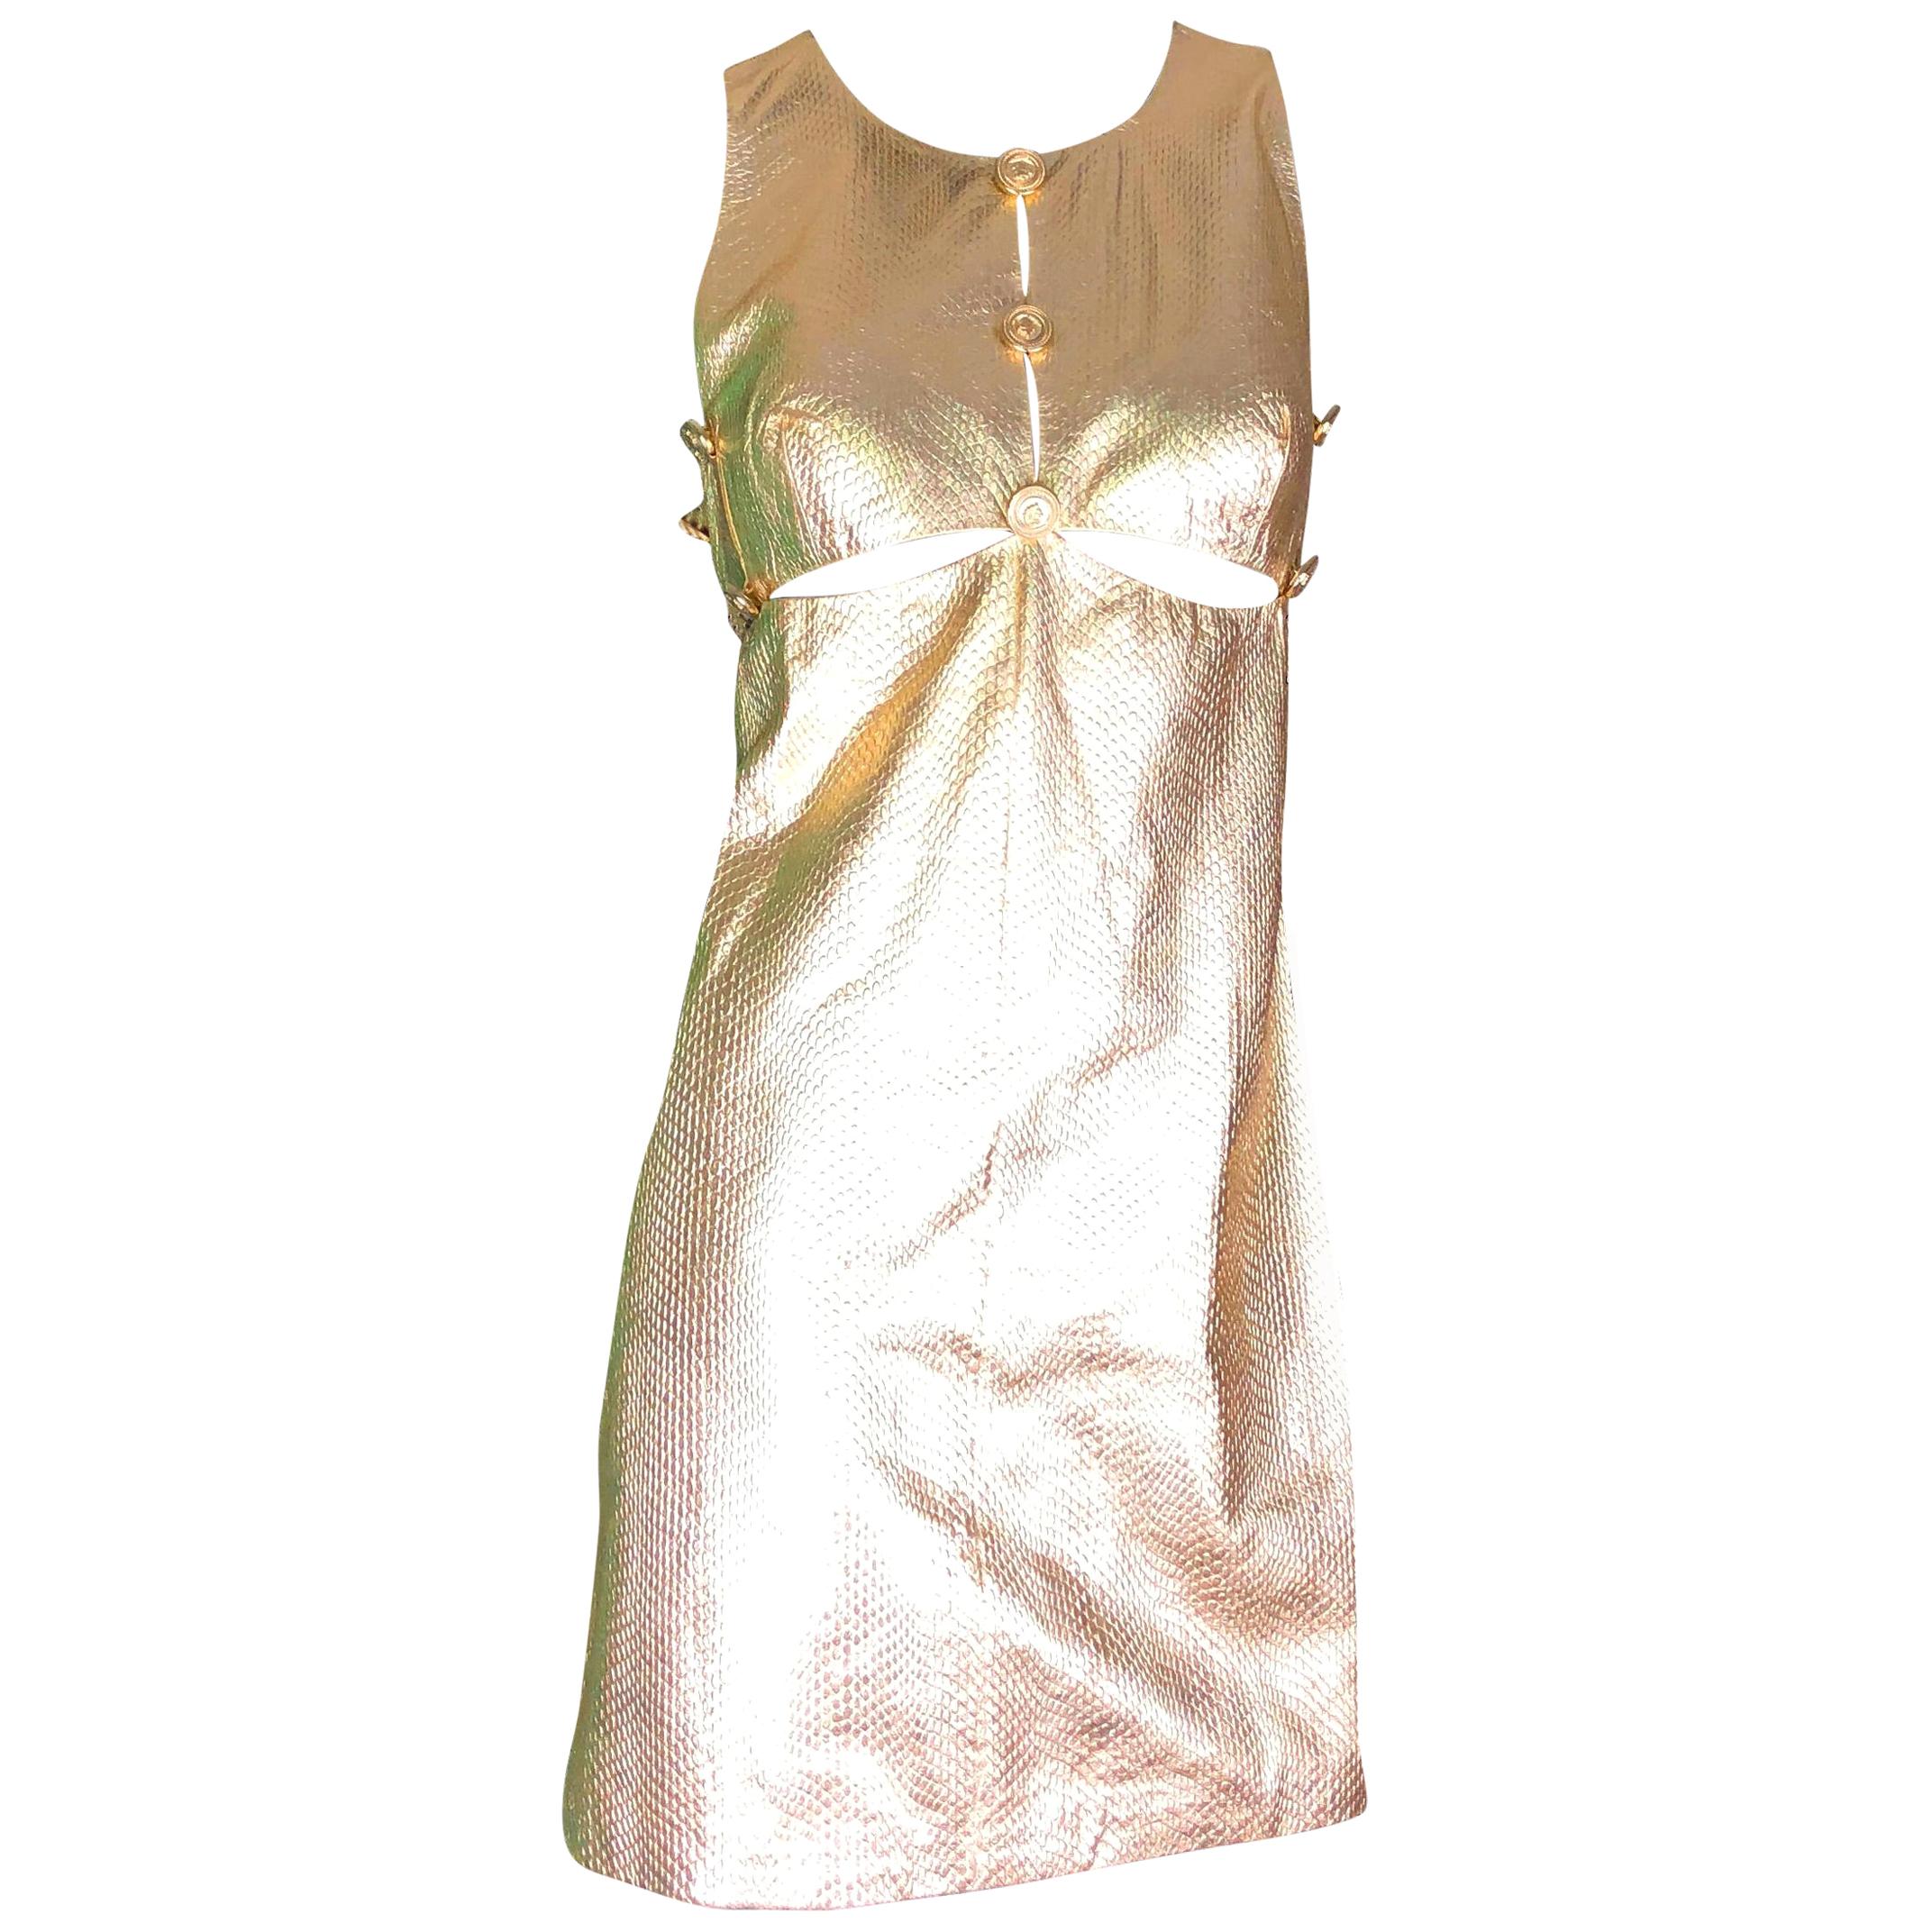 UNWORN Gianni Versace 1994 Medusa Metallic Golden Leather Dress Museum Piece 44 For Sale